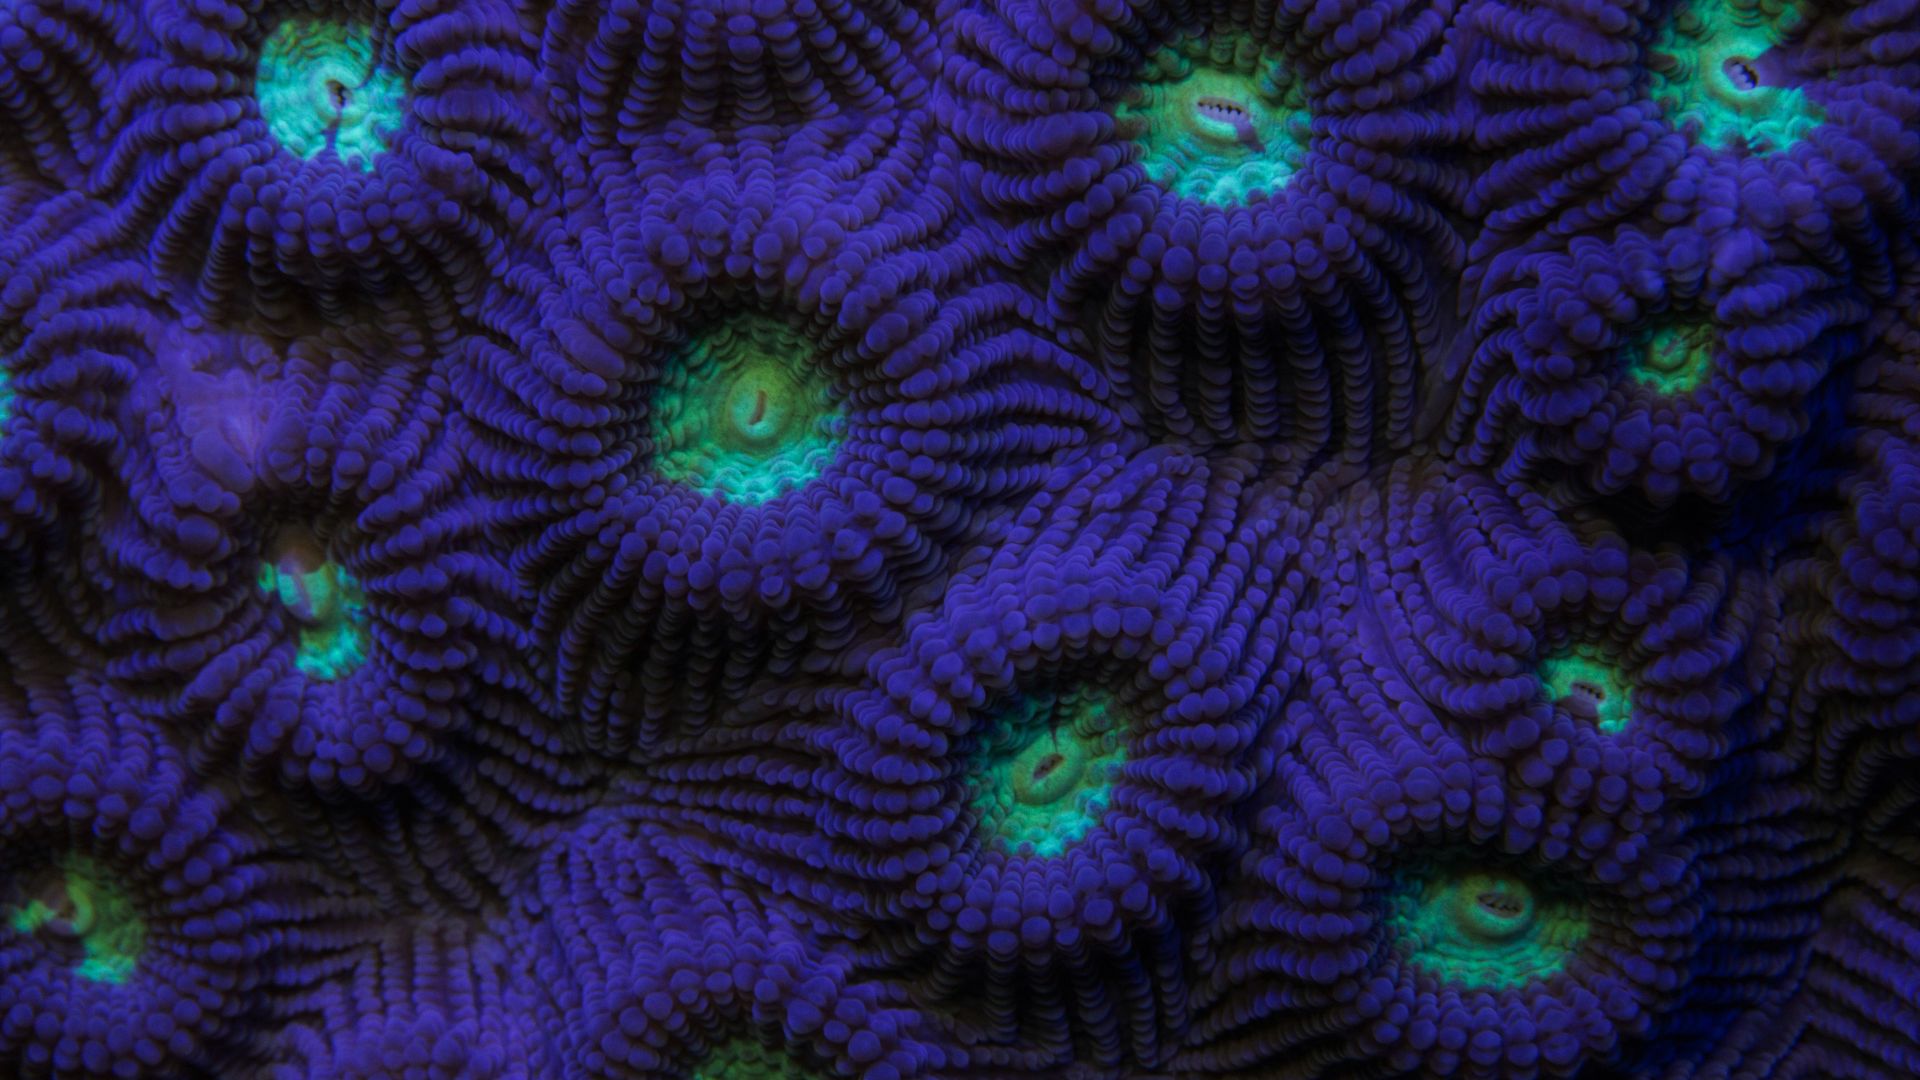 Do heat tolerant corals exist?